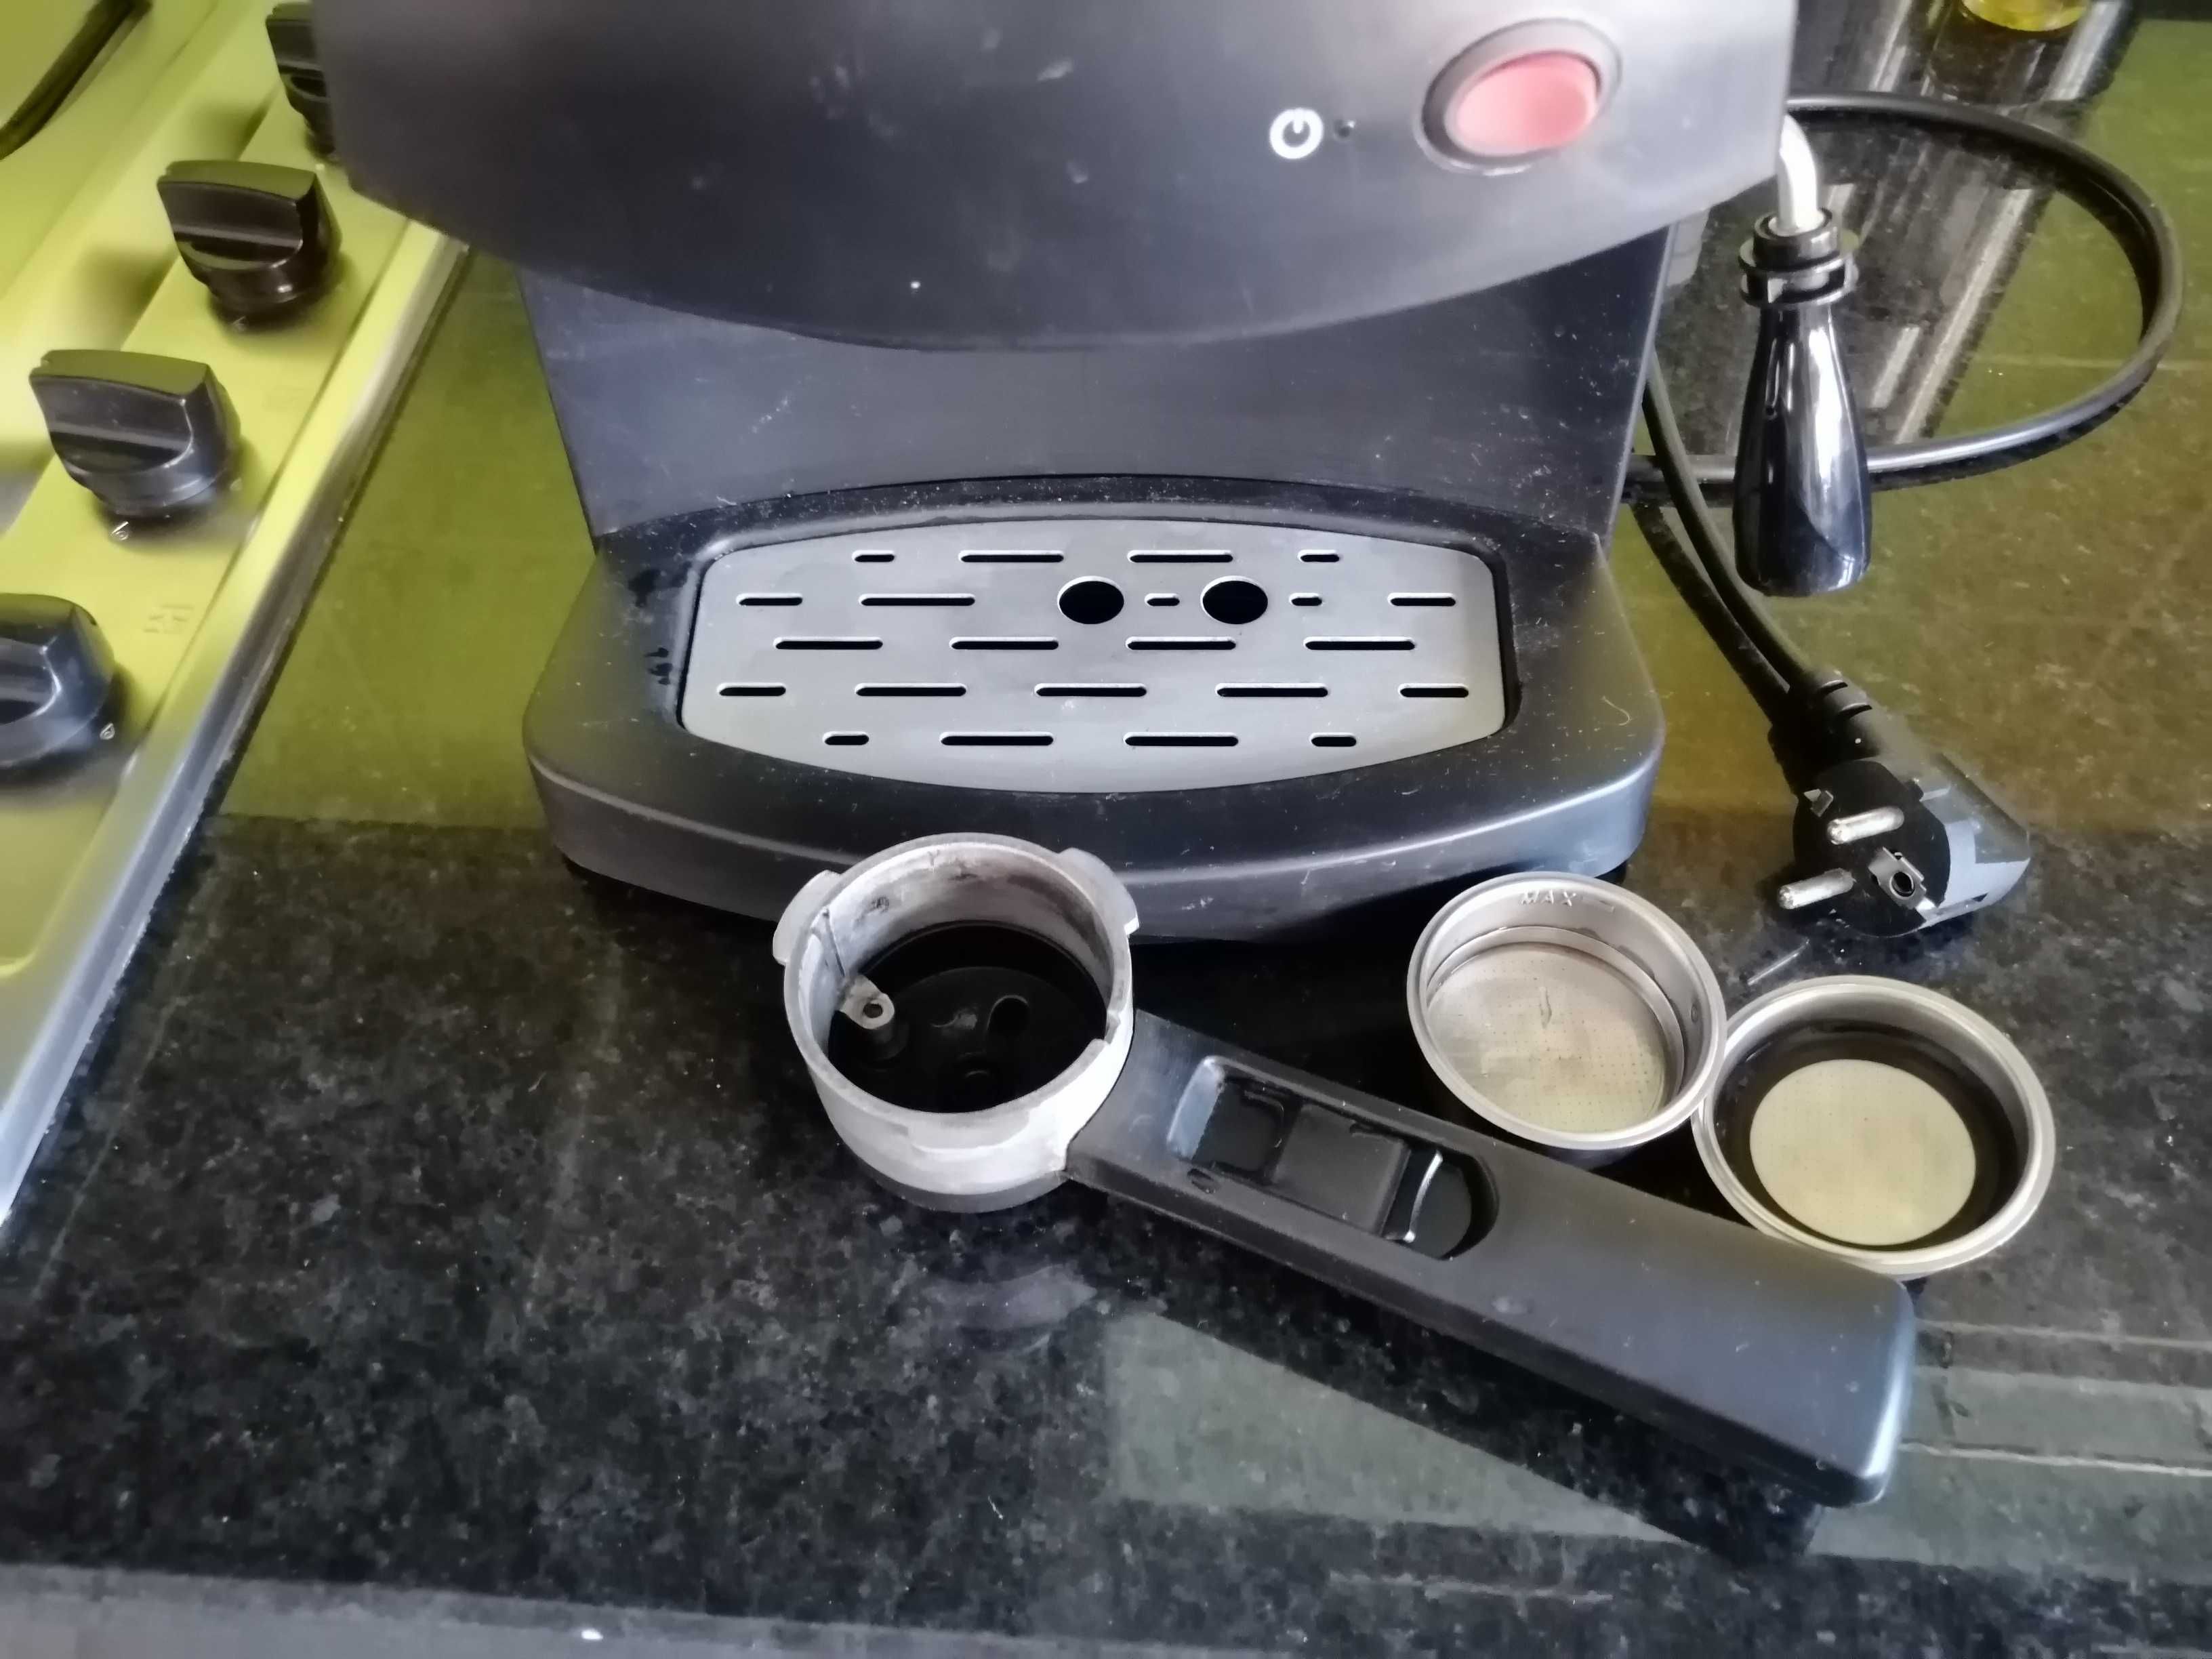 Maquina de café de manipulo Becken Kaldi com vapor de agua quente